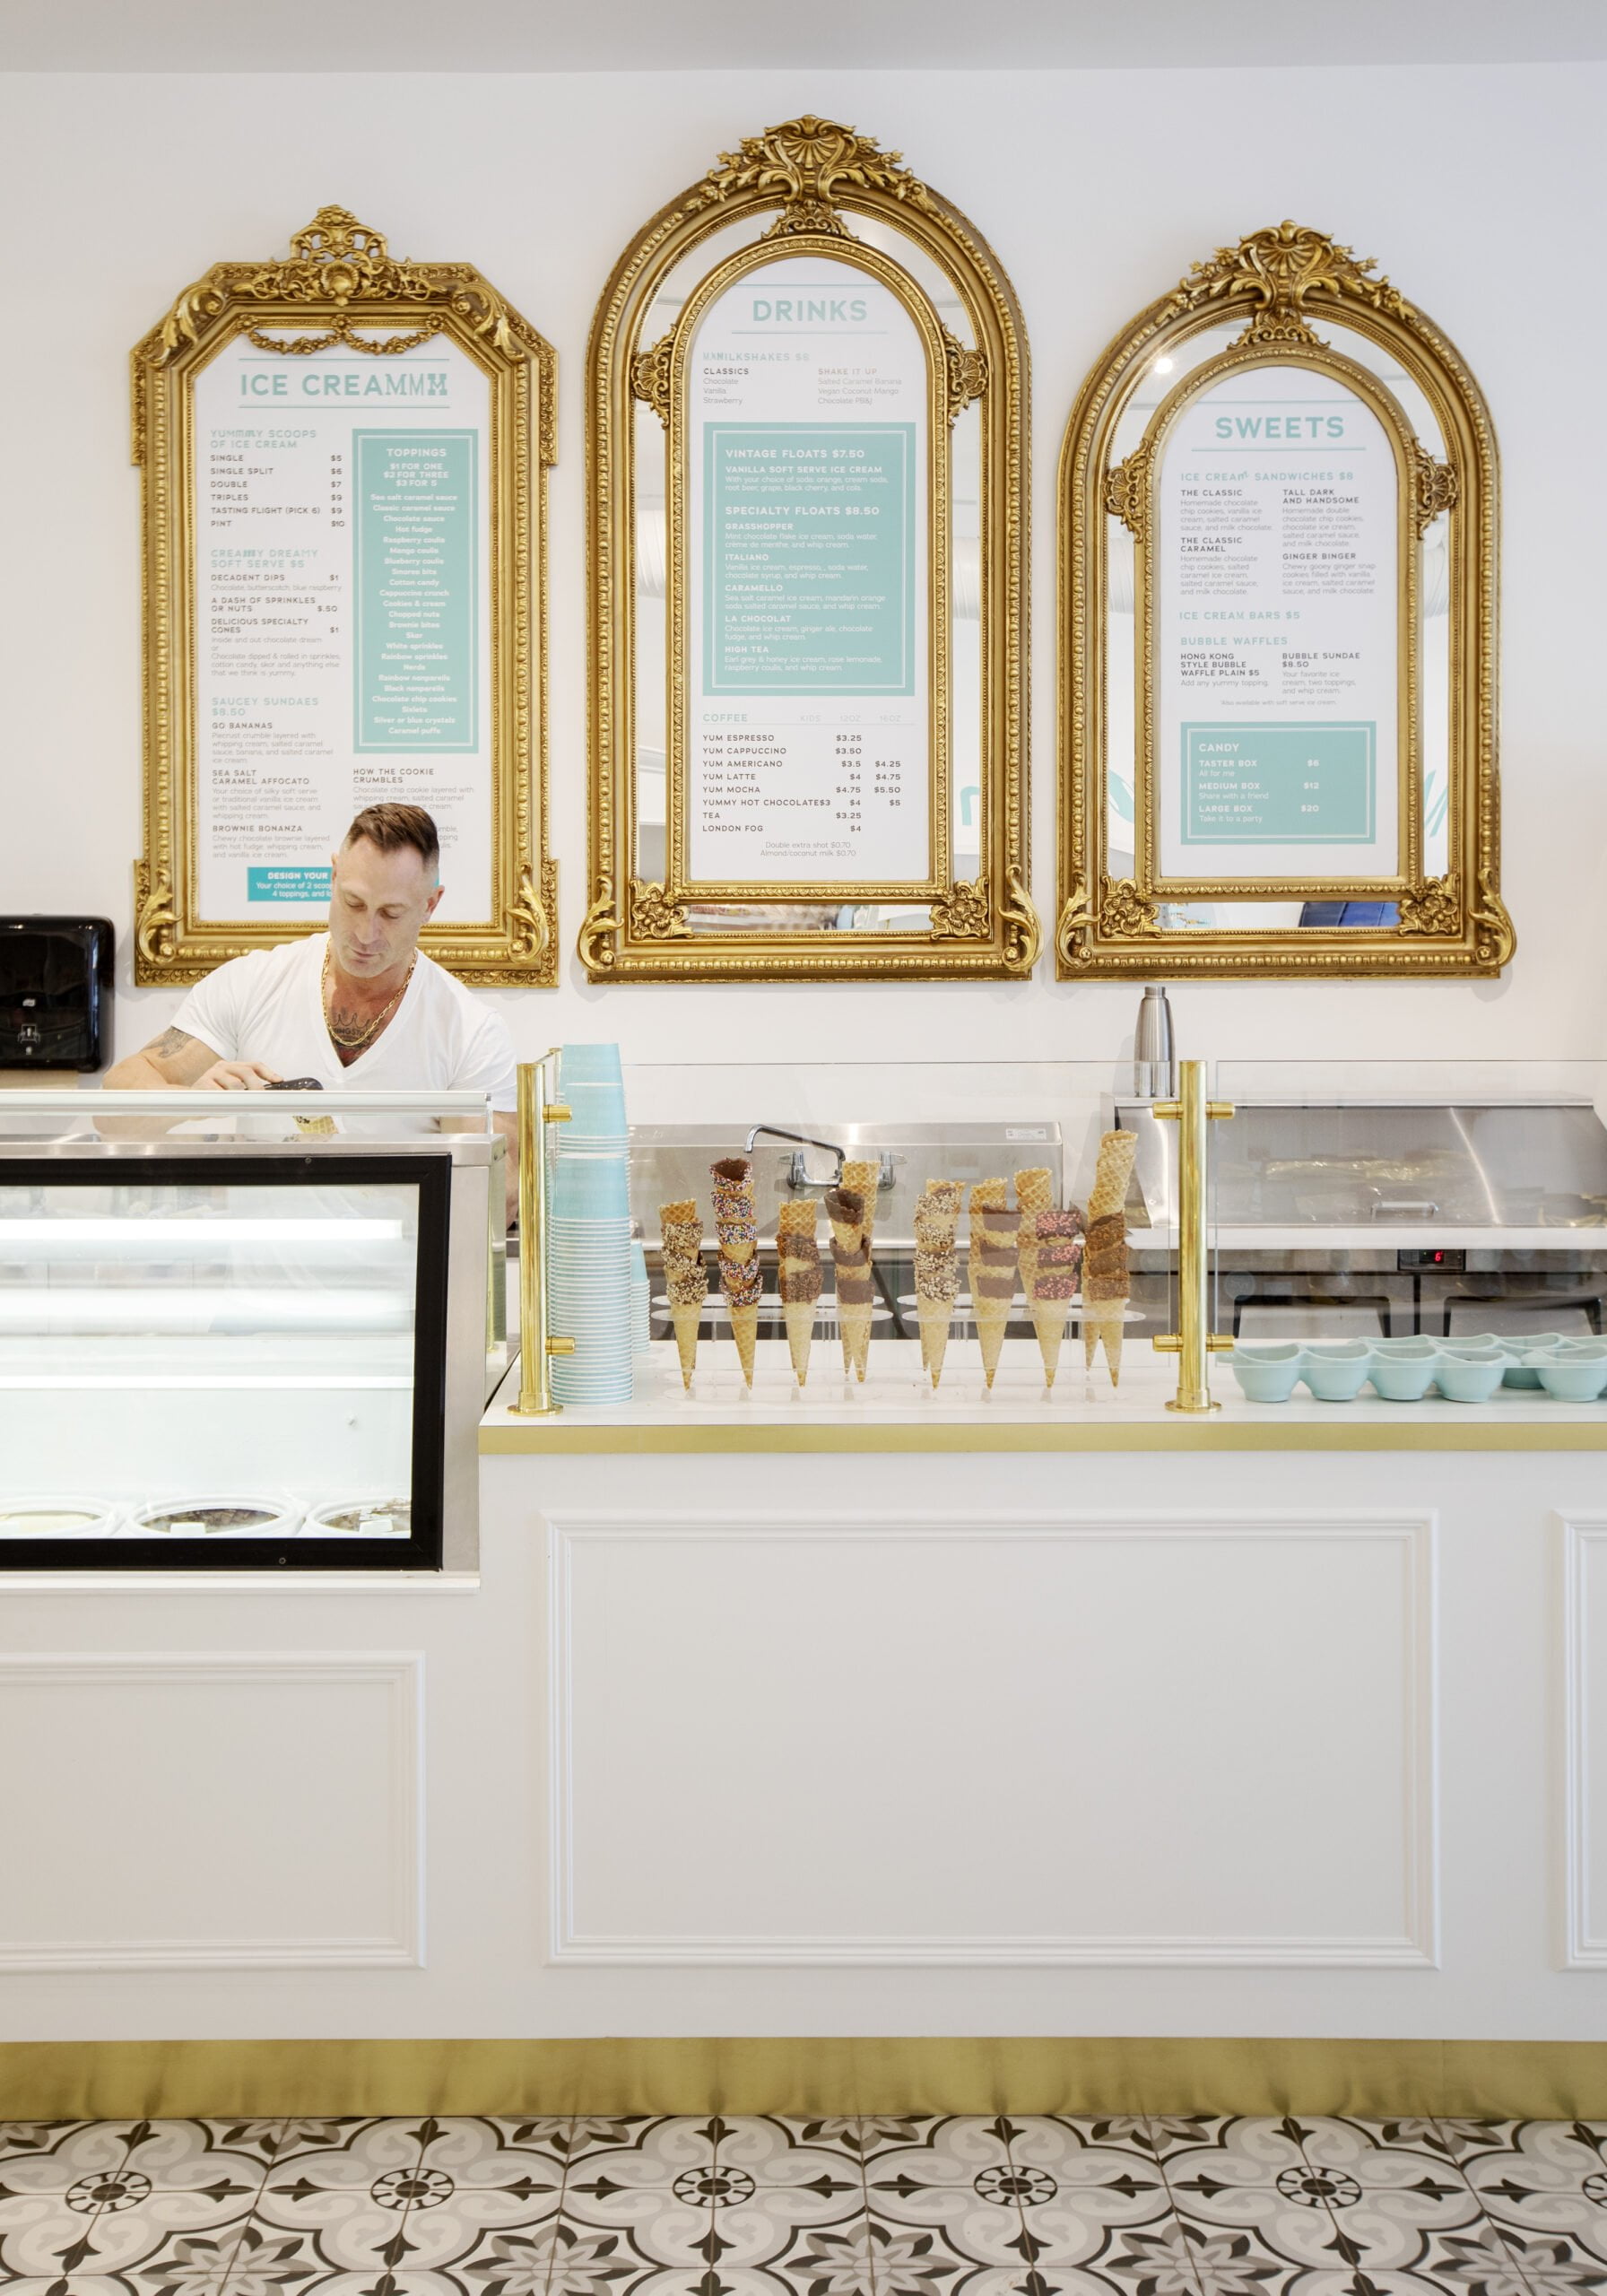 Interior of YUM Ice Creamery and Sweet Shop.